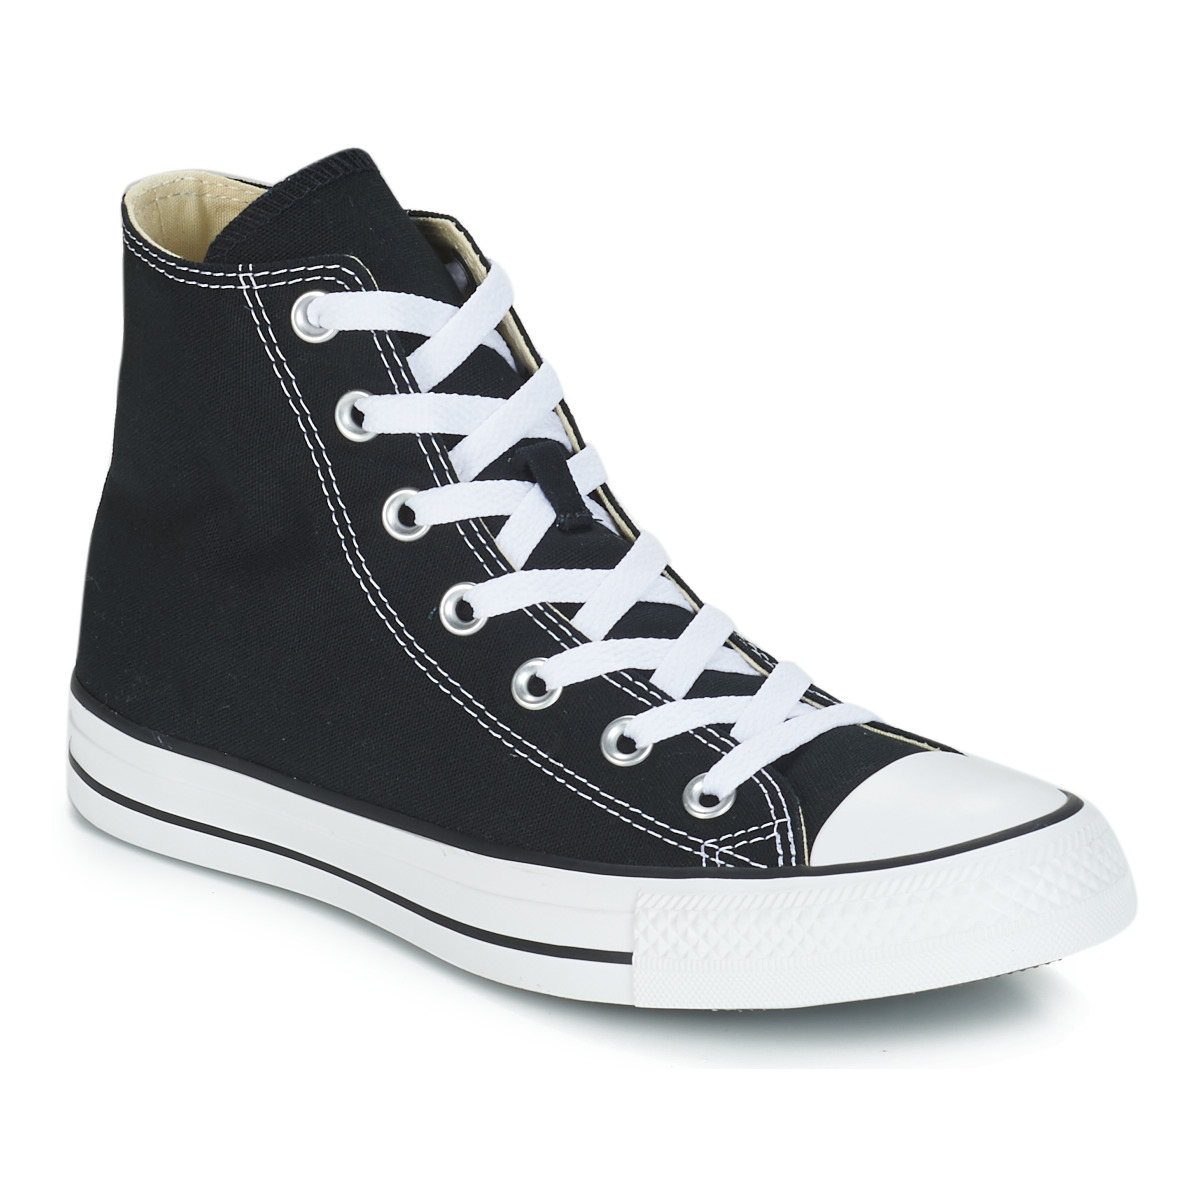 Converse Chuck Taylor All Star Sneakers Hoog Unisex - Black - Maat 42.5